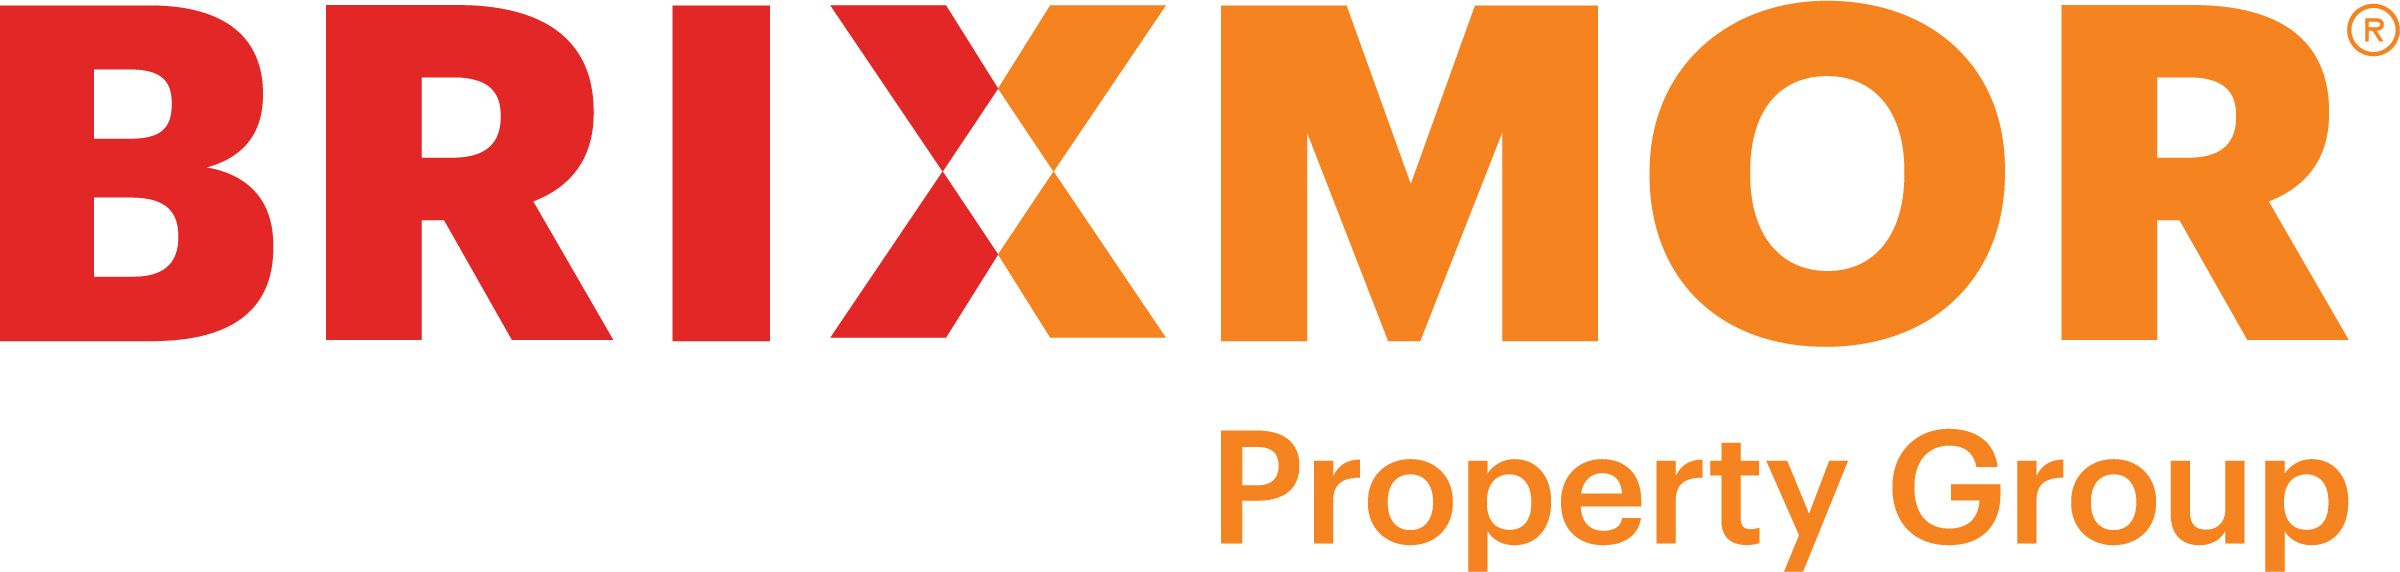 Brixmor Property Group Company Logo